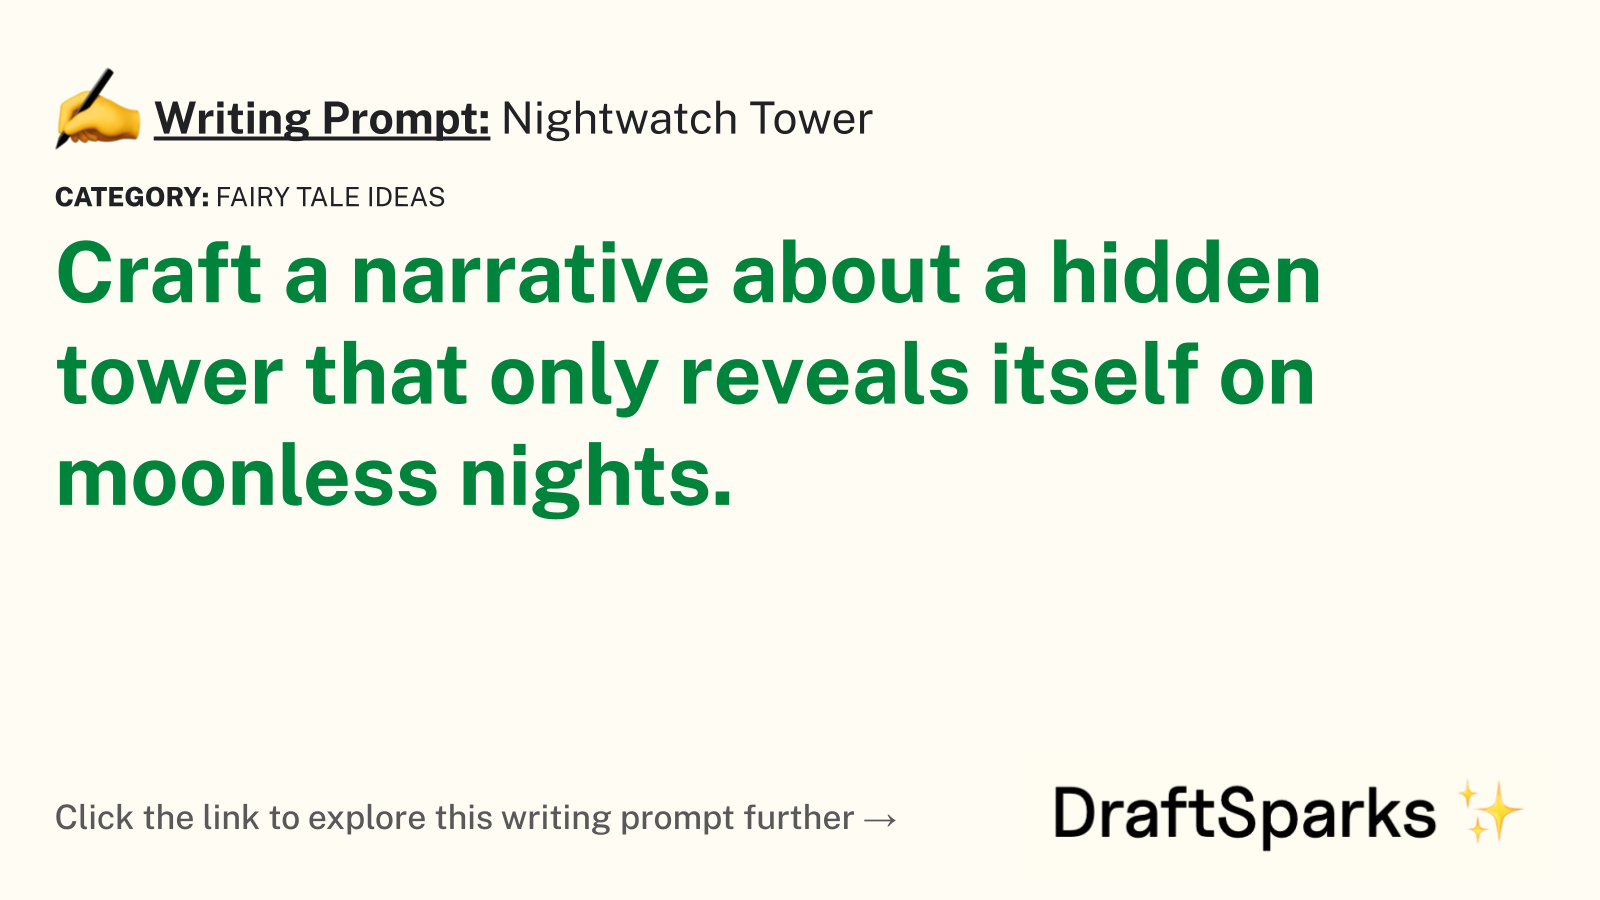 Nightwatch Tower